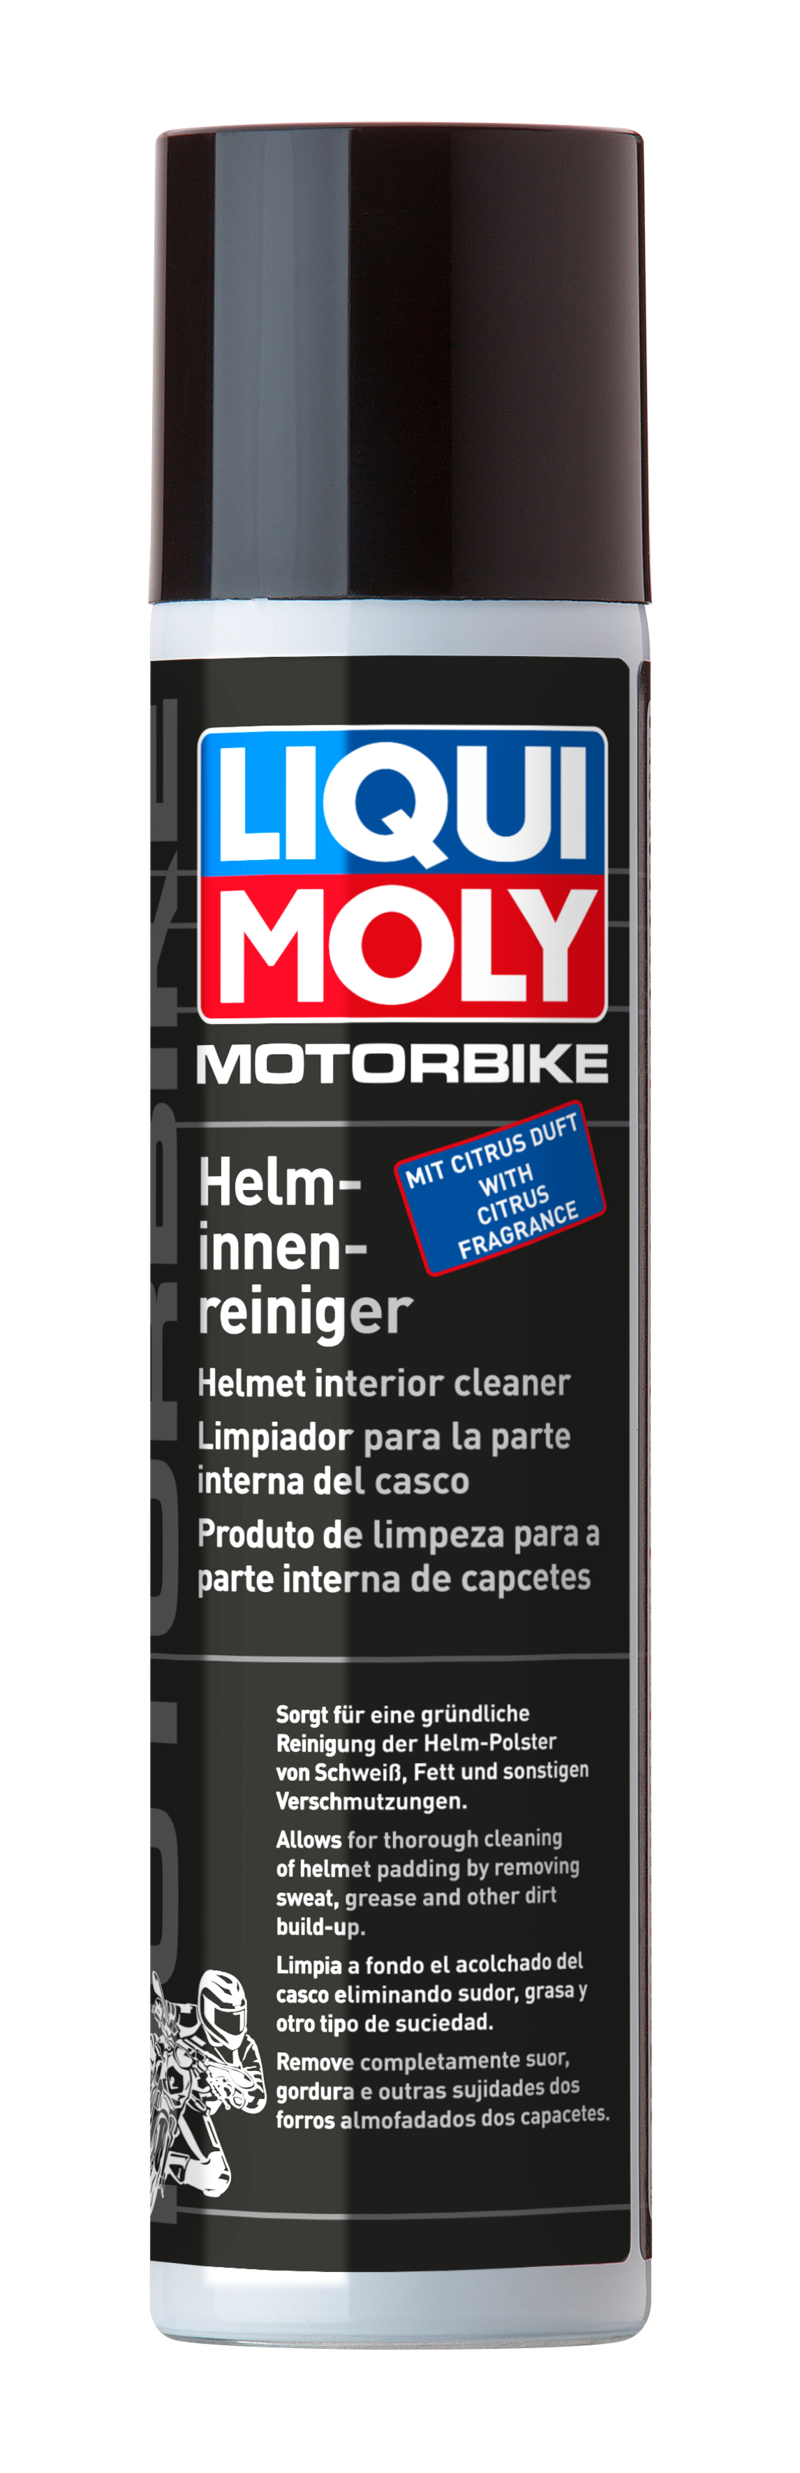 Motorbike Limpiador para la parte interna del casco (300 ML) Liqui Moly